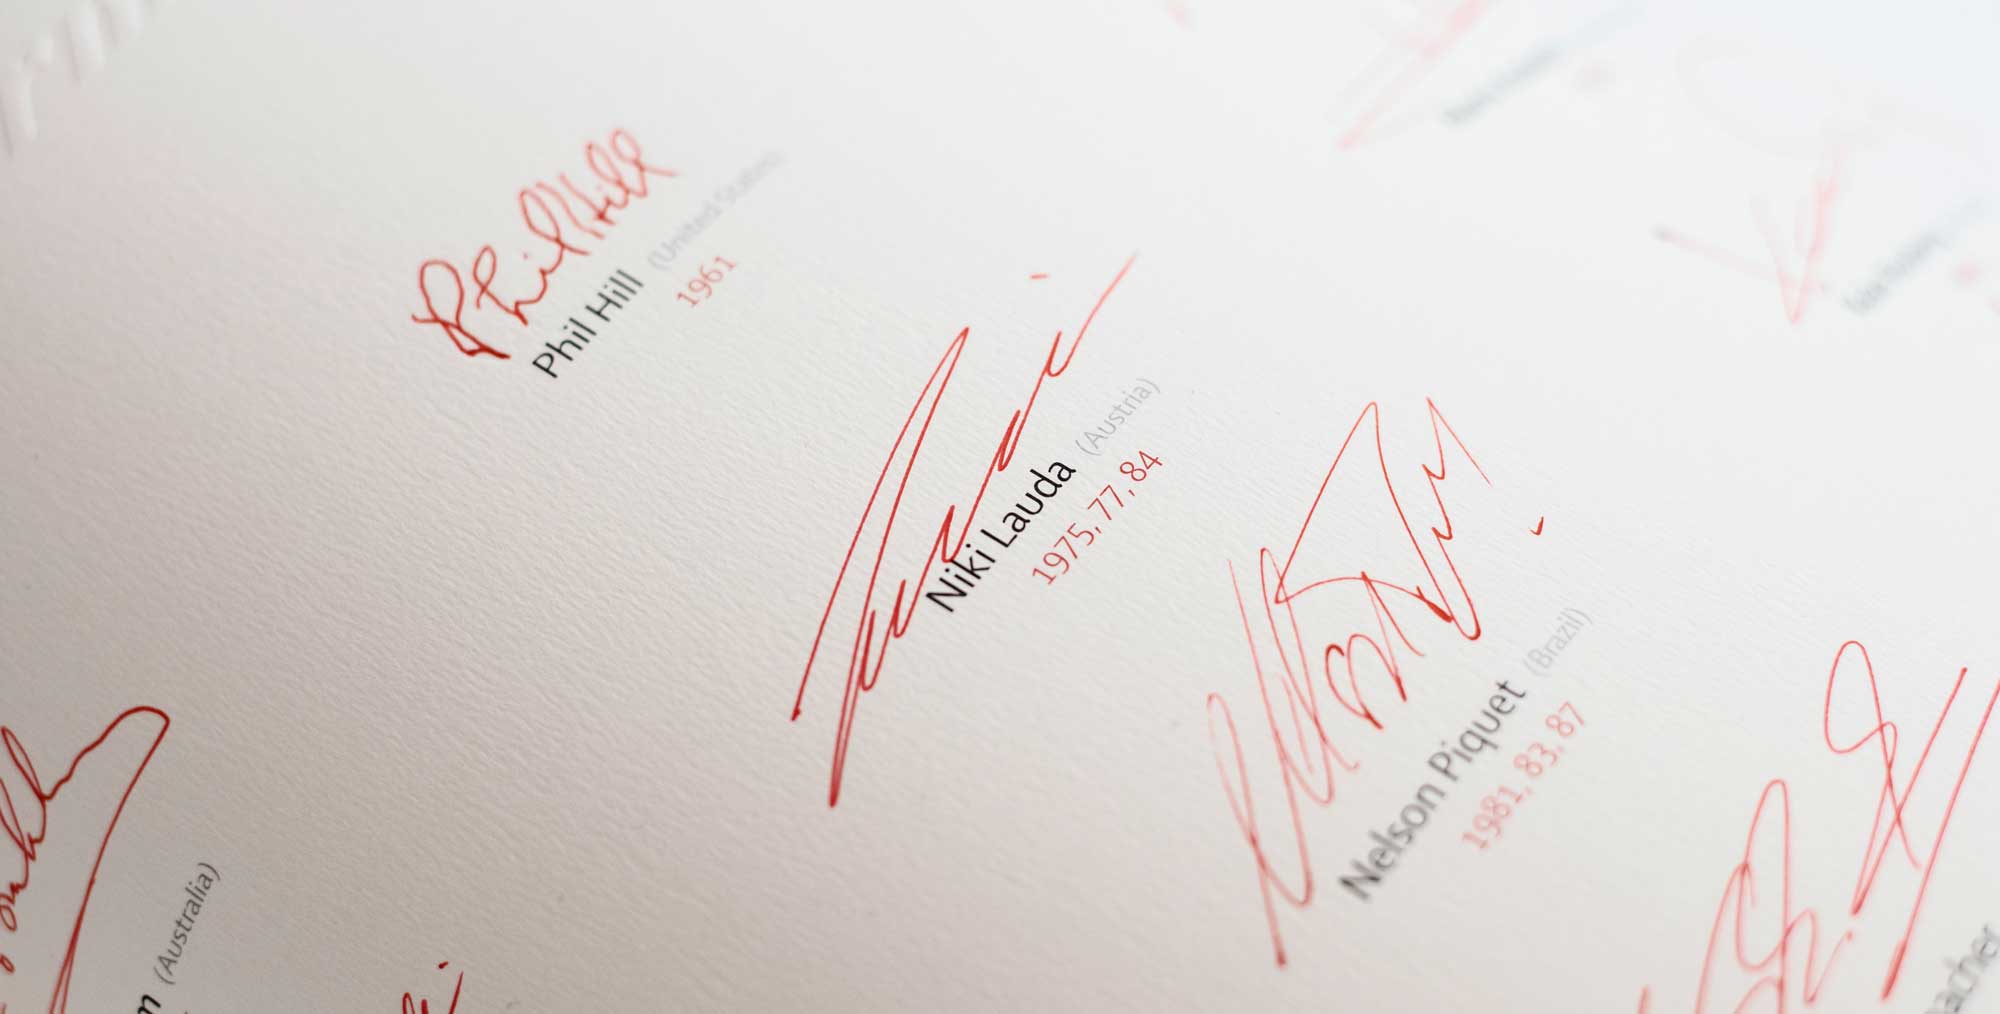 Niki Lauda's signature on The Official Formula 1 Opus, Champion Edition